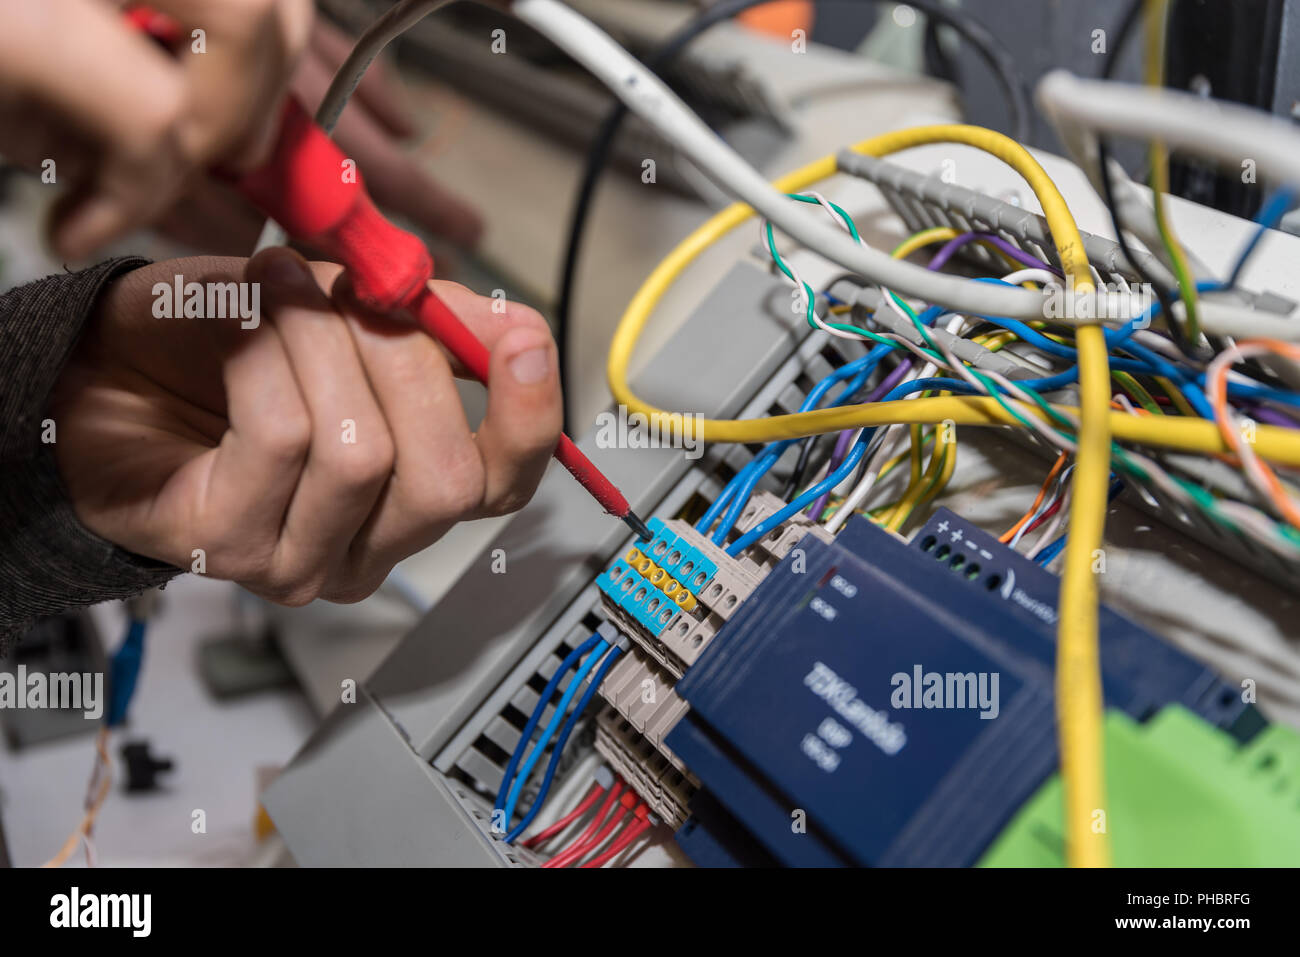 Elektriker arbeitet an Leistungsanschlüsse - close-up Stockfoto